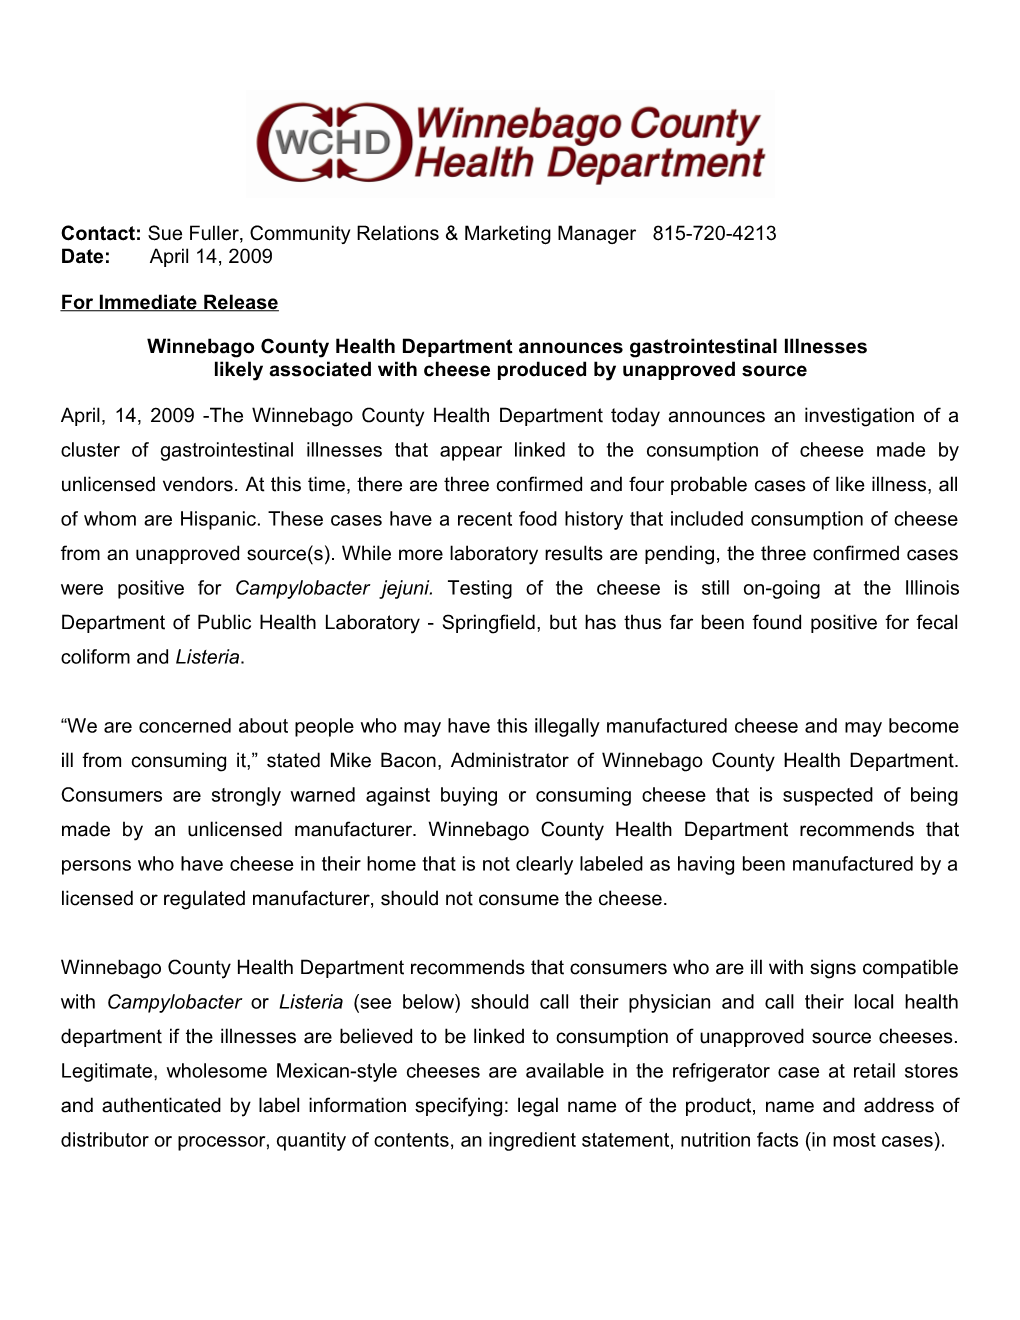 Winnebago County Health Department Announces Gastrointestinal Illnesses